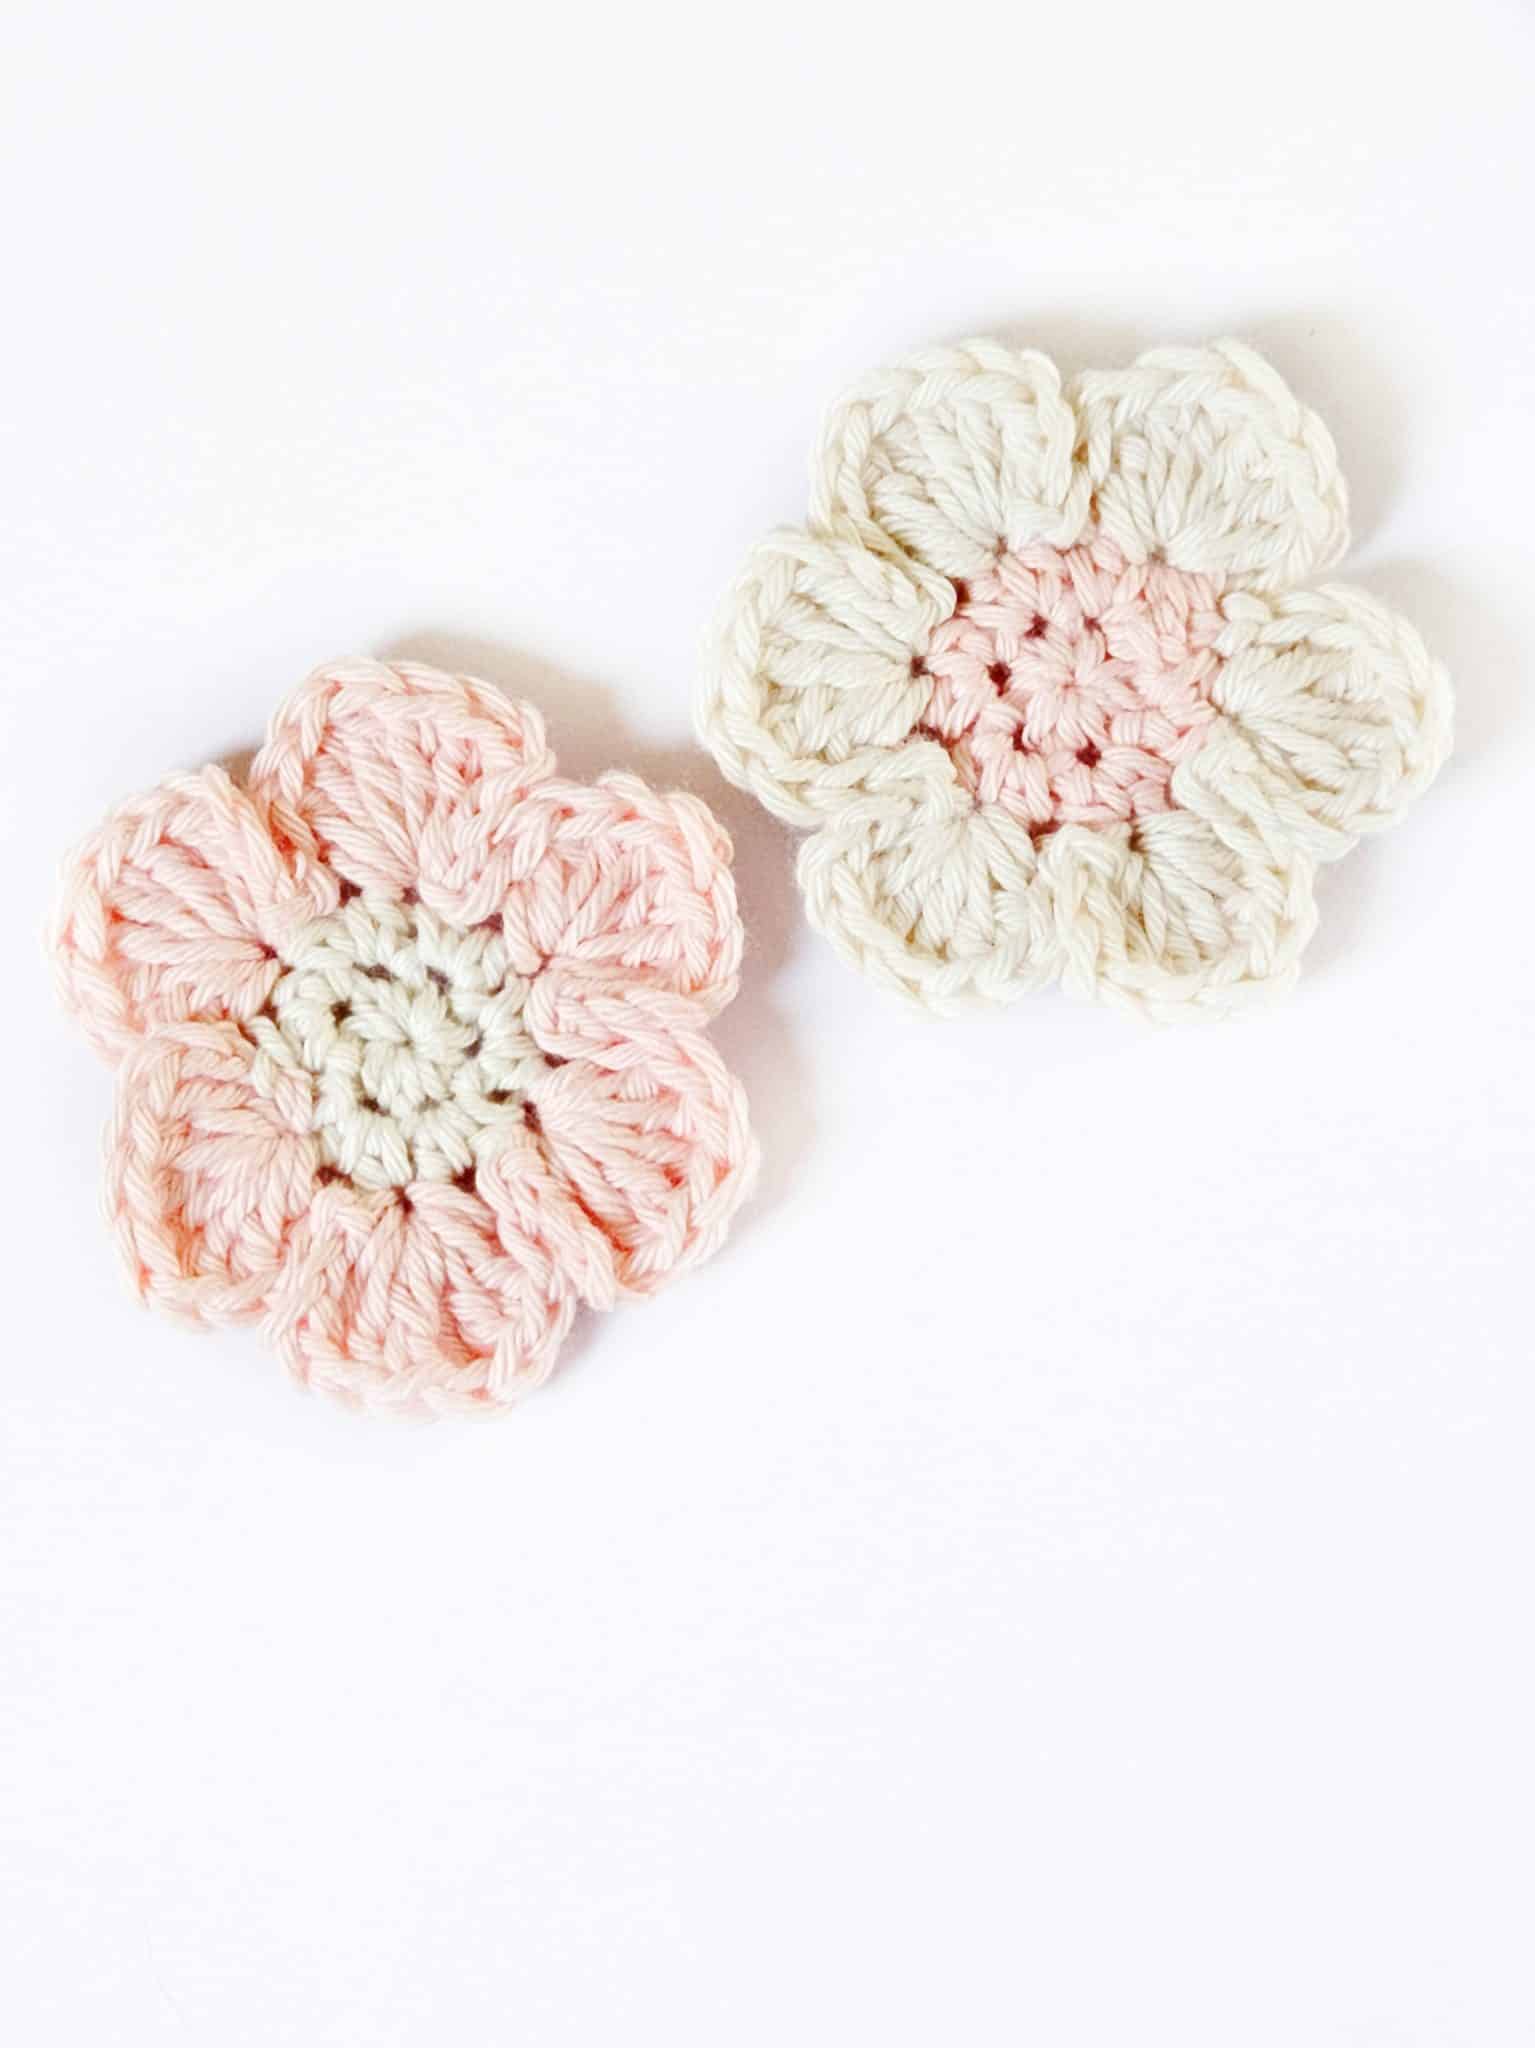 In Love with Apples Crochet Applique • RaffamusaDesigns